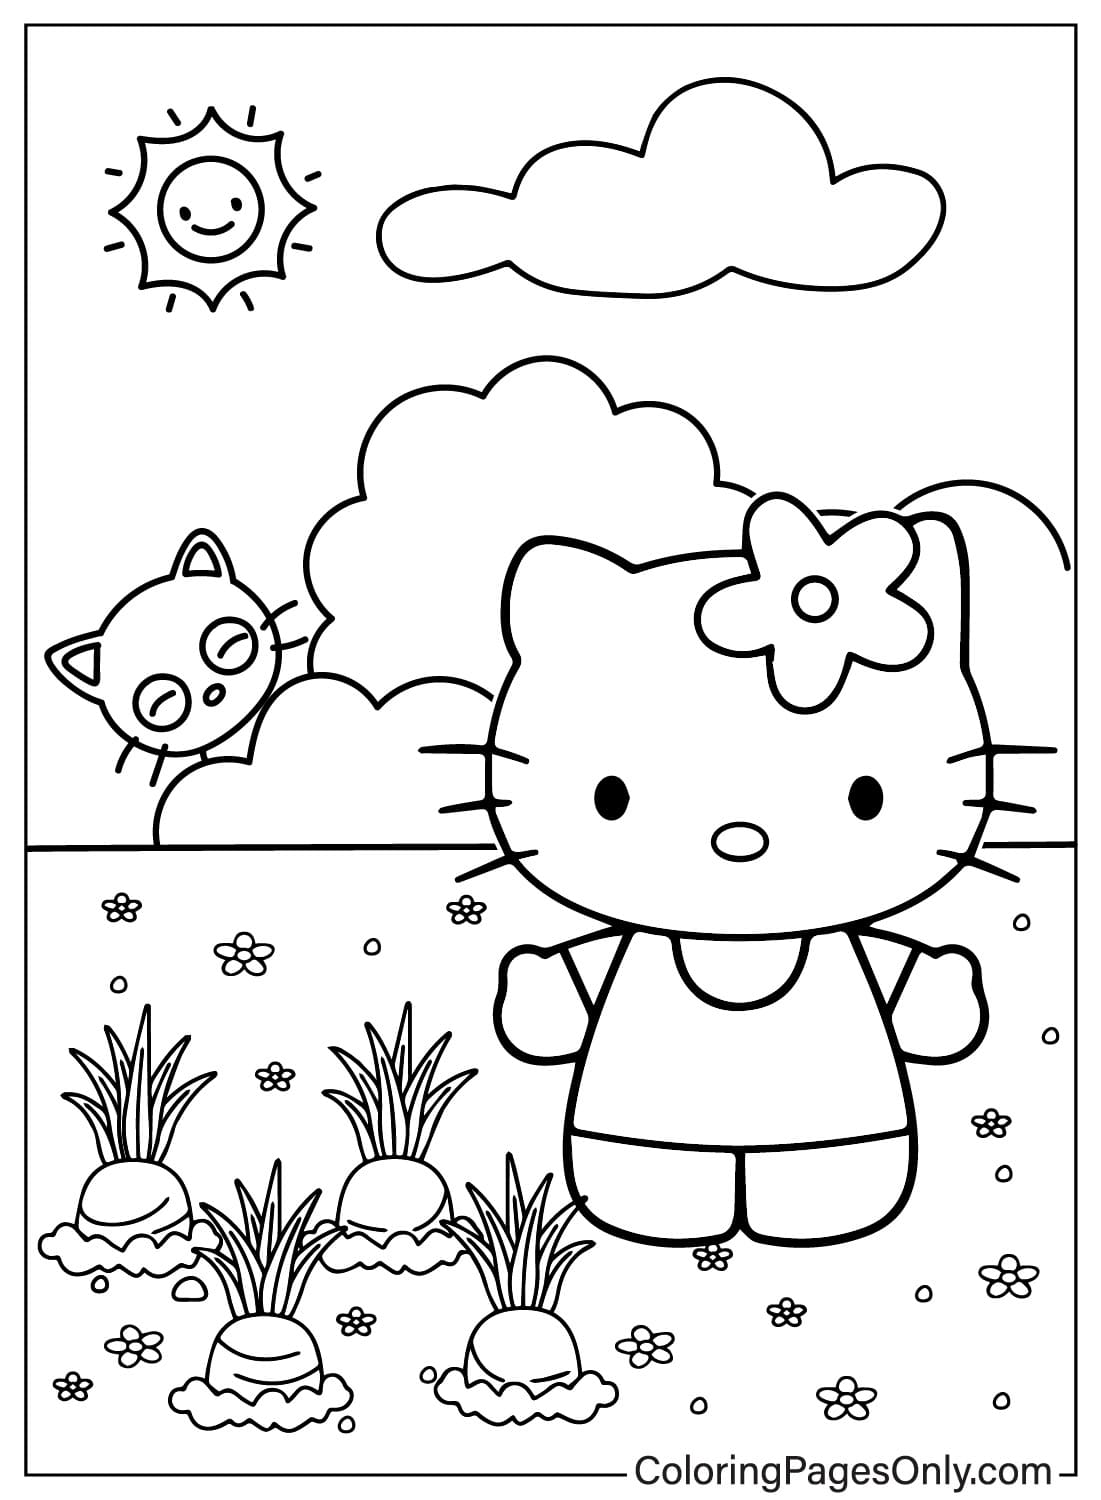 Chococat и Hello Kitty раскрасят из Chococat